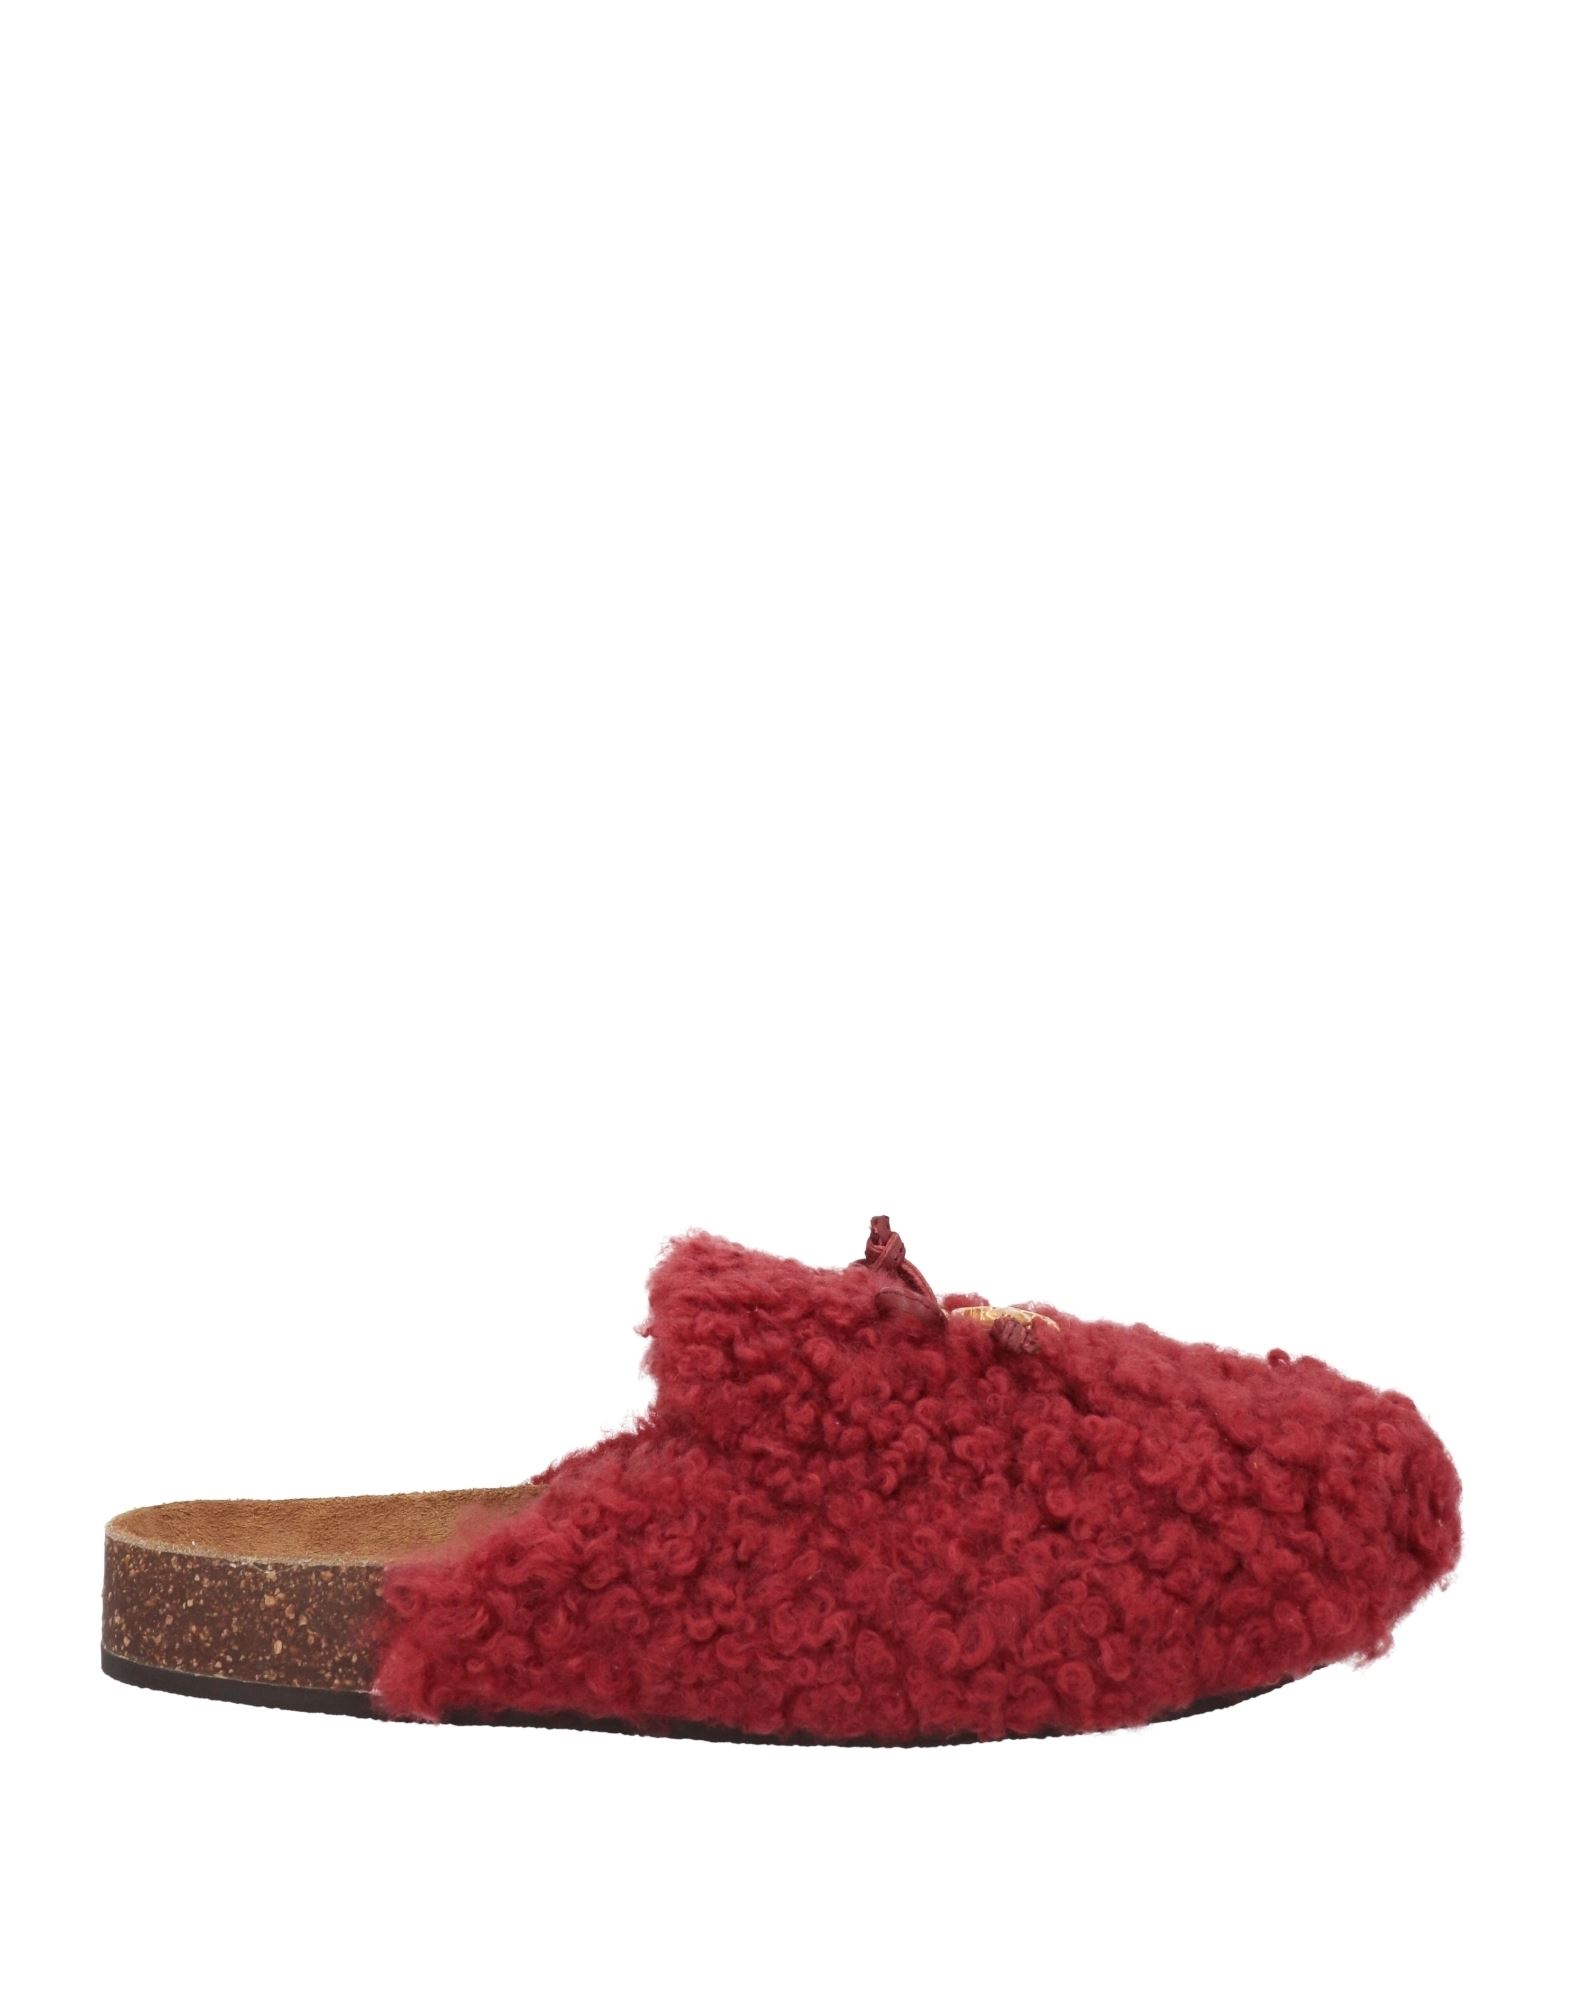 Tory Burch Woman Mules & Clogs Brick Red Size 6.5 Sheepskin, Shearling